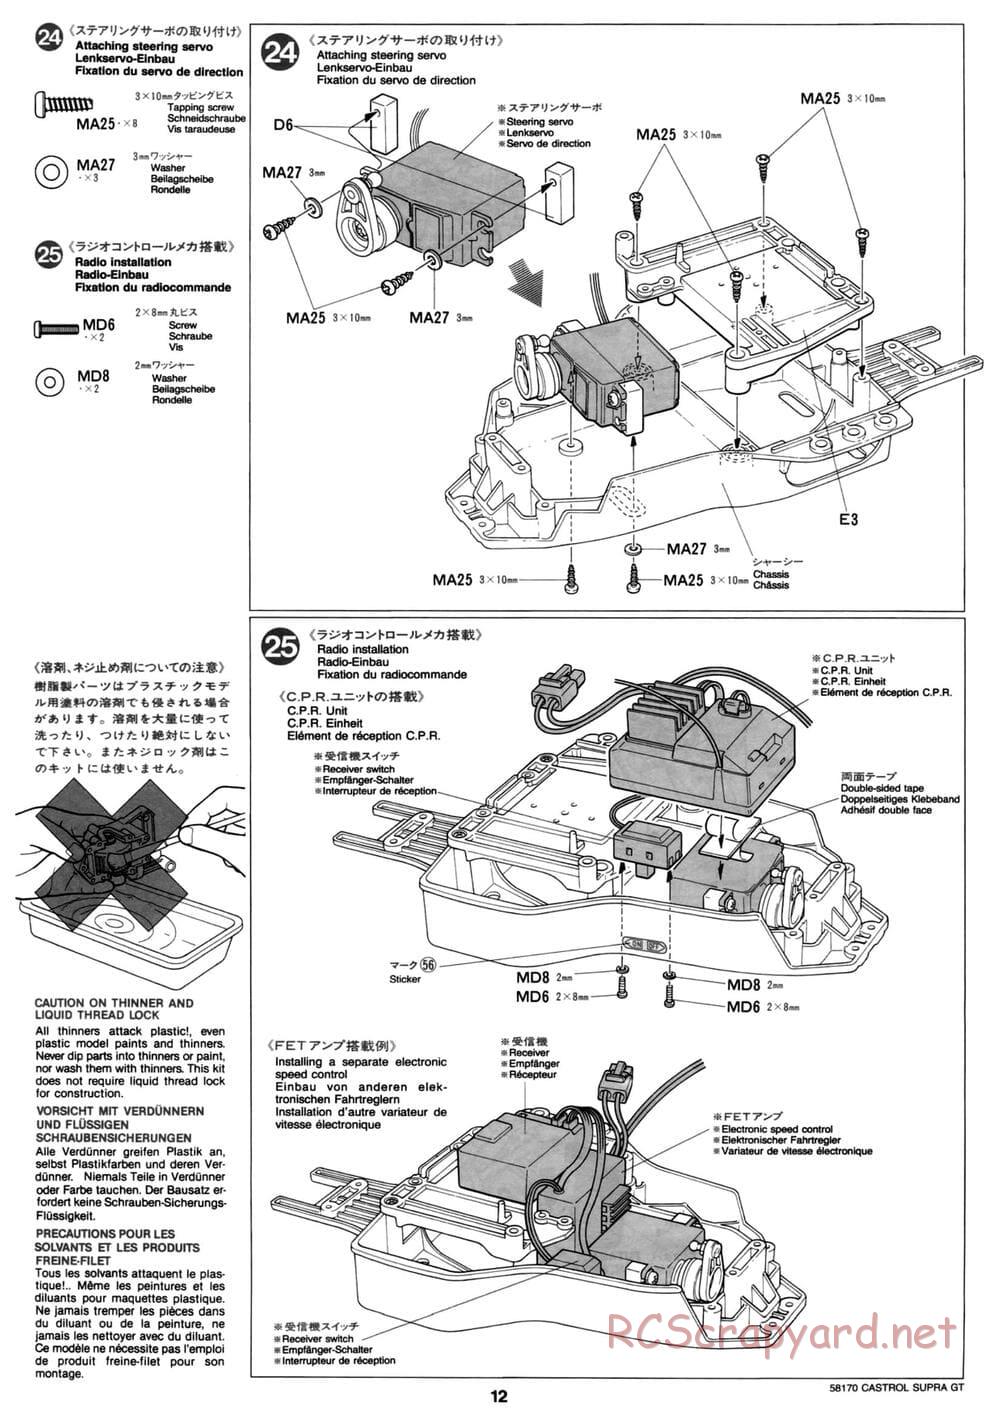 Tamiya - Castrol Toyota Tom's Supra GT - TA-02W Chassis - Manual - Page 12